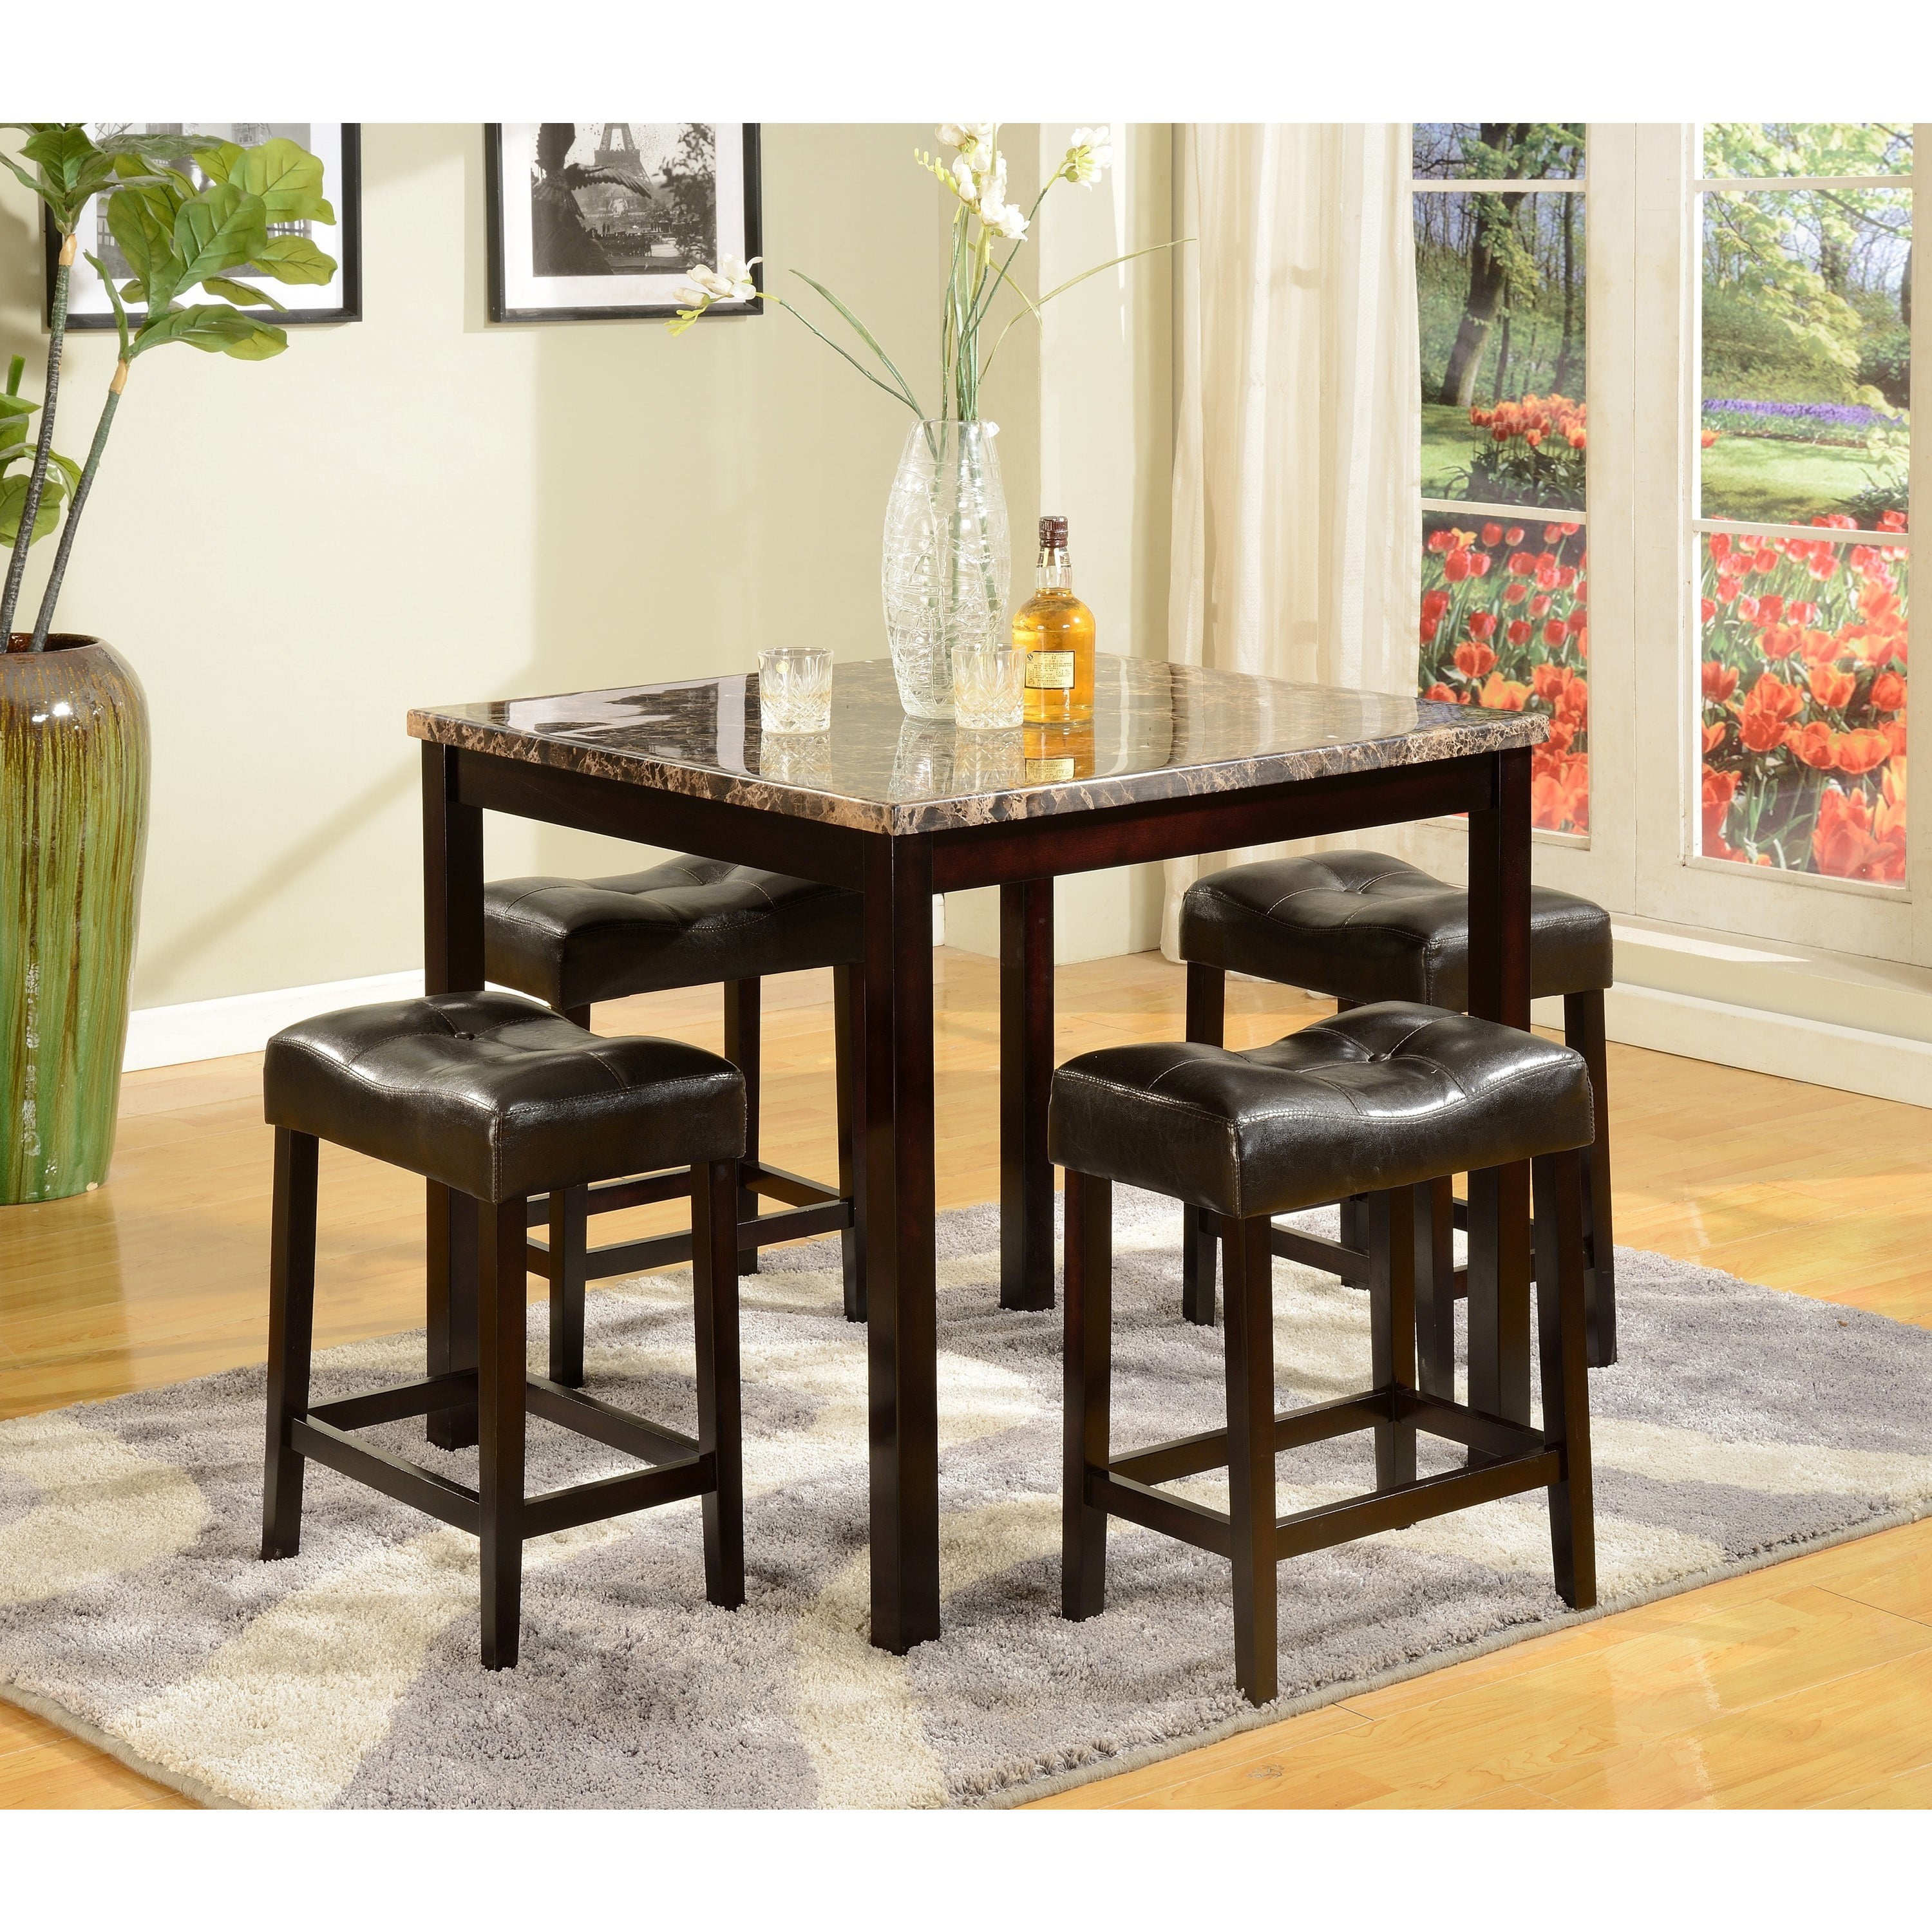 American Furniture Classics 5 Piece Counter Height Pub Table Set Walmartcom Walmartcom